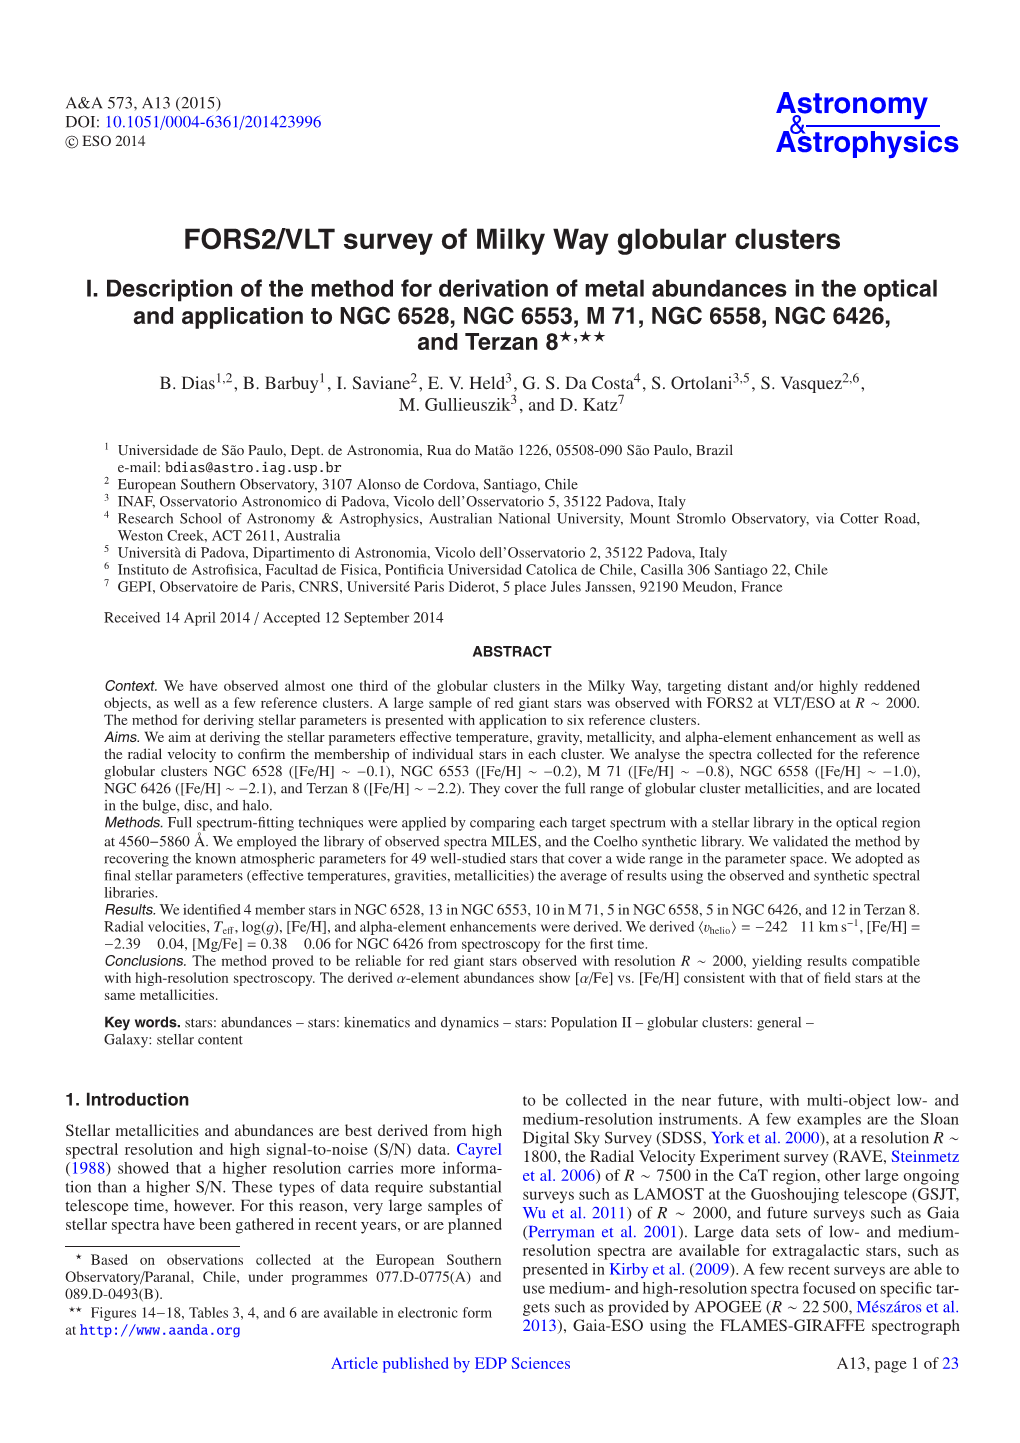 FORS2/VLT Survey of Milky Way Globular Clusters